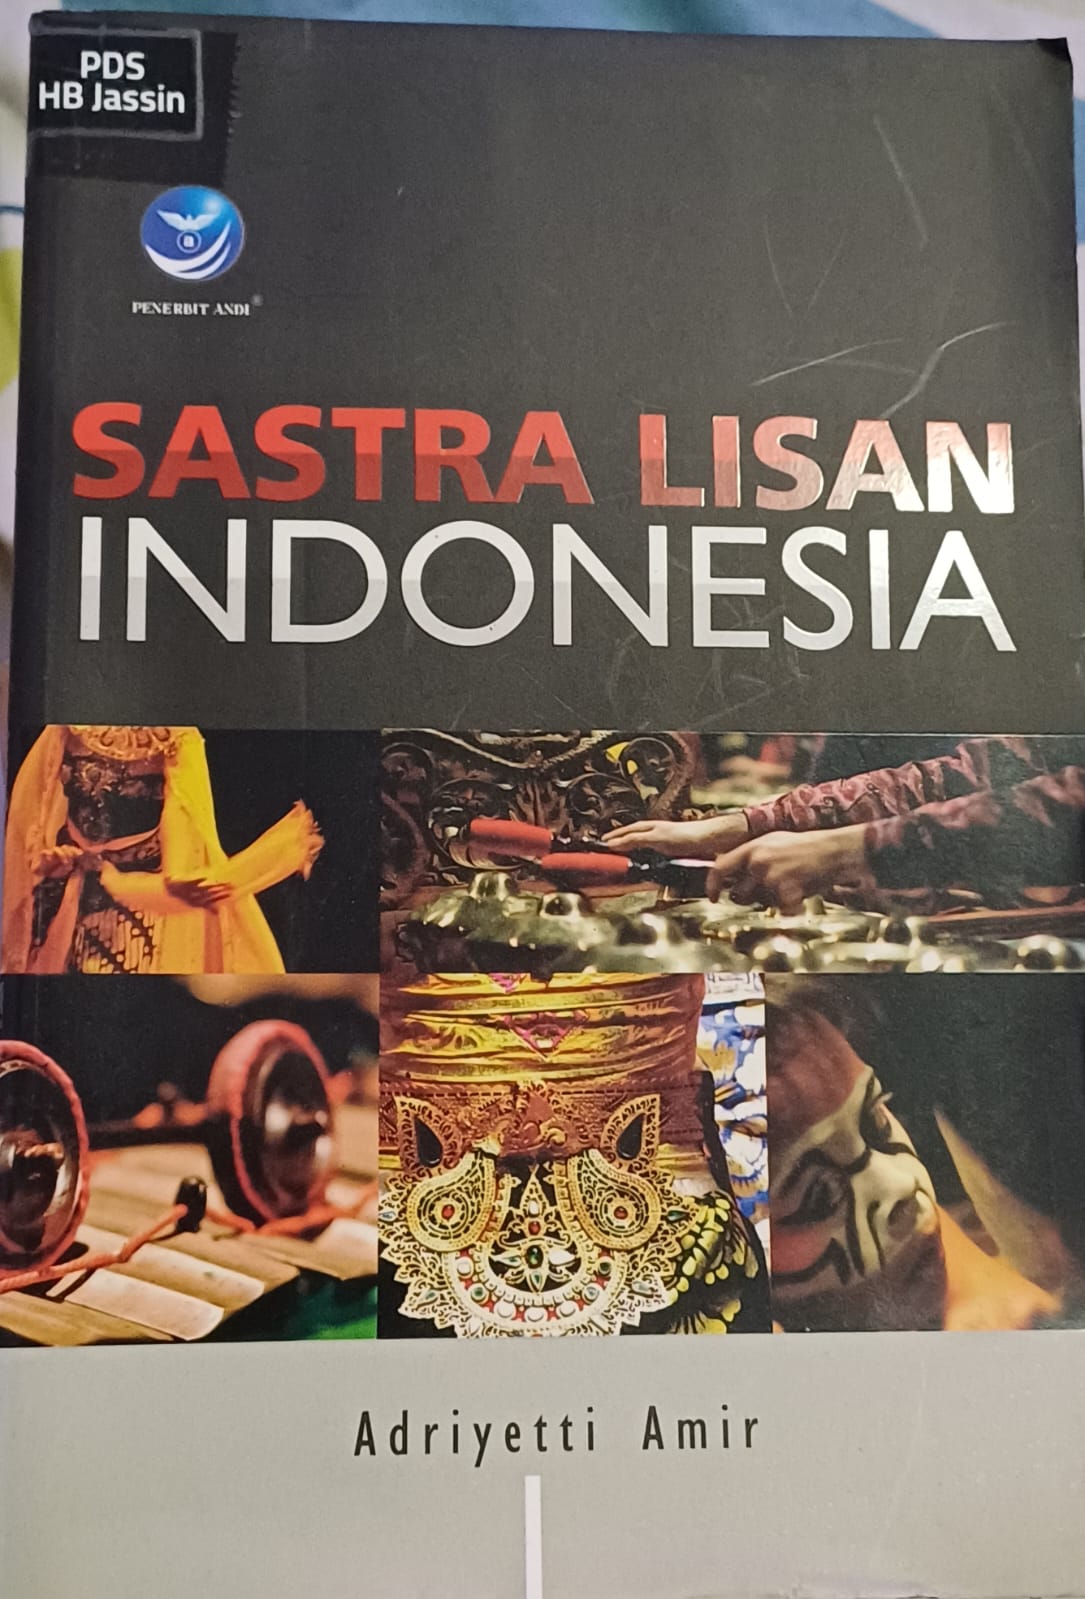 Sastra lisan indonesia